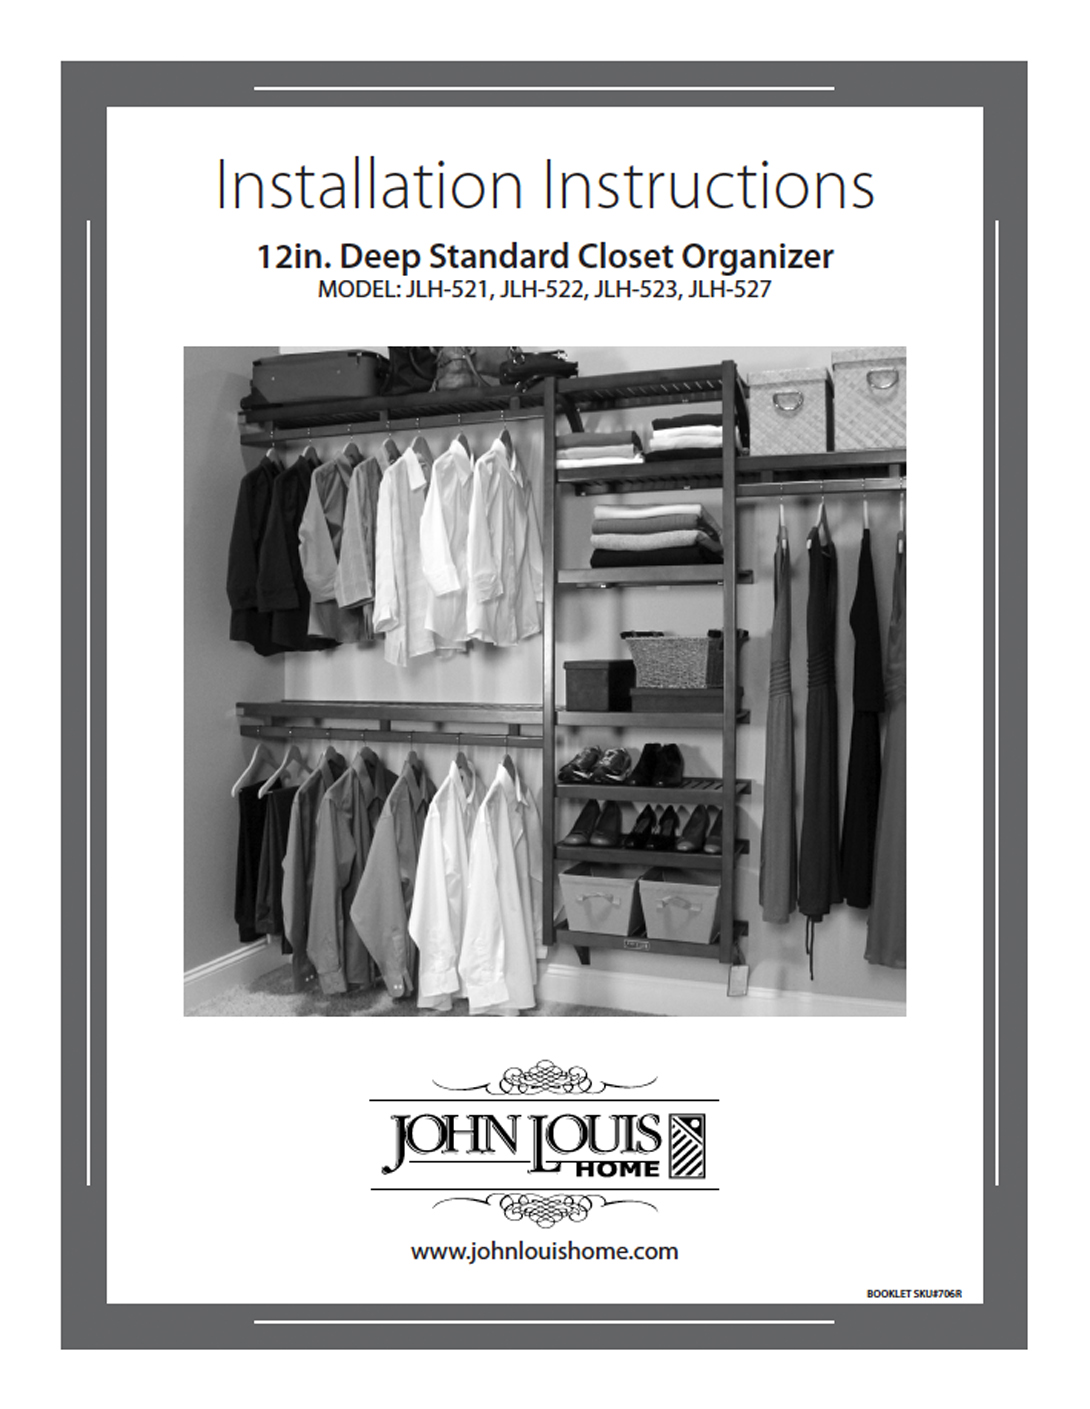 Closet Organizer Installation Instructions | John Louis Home